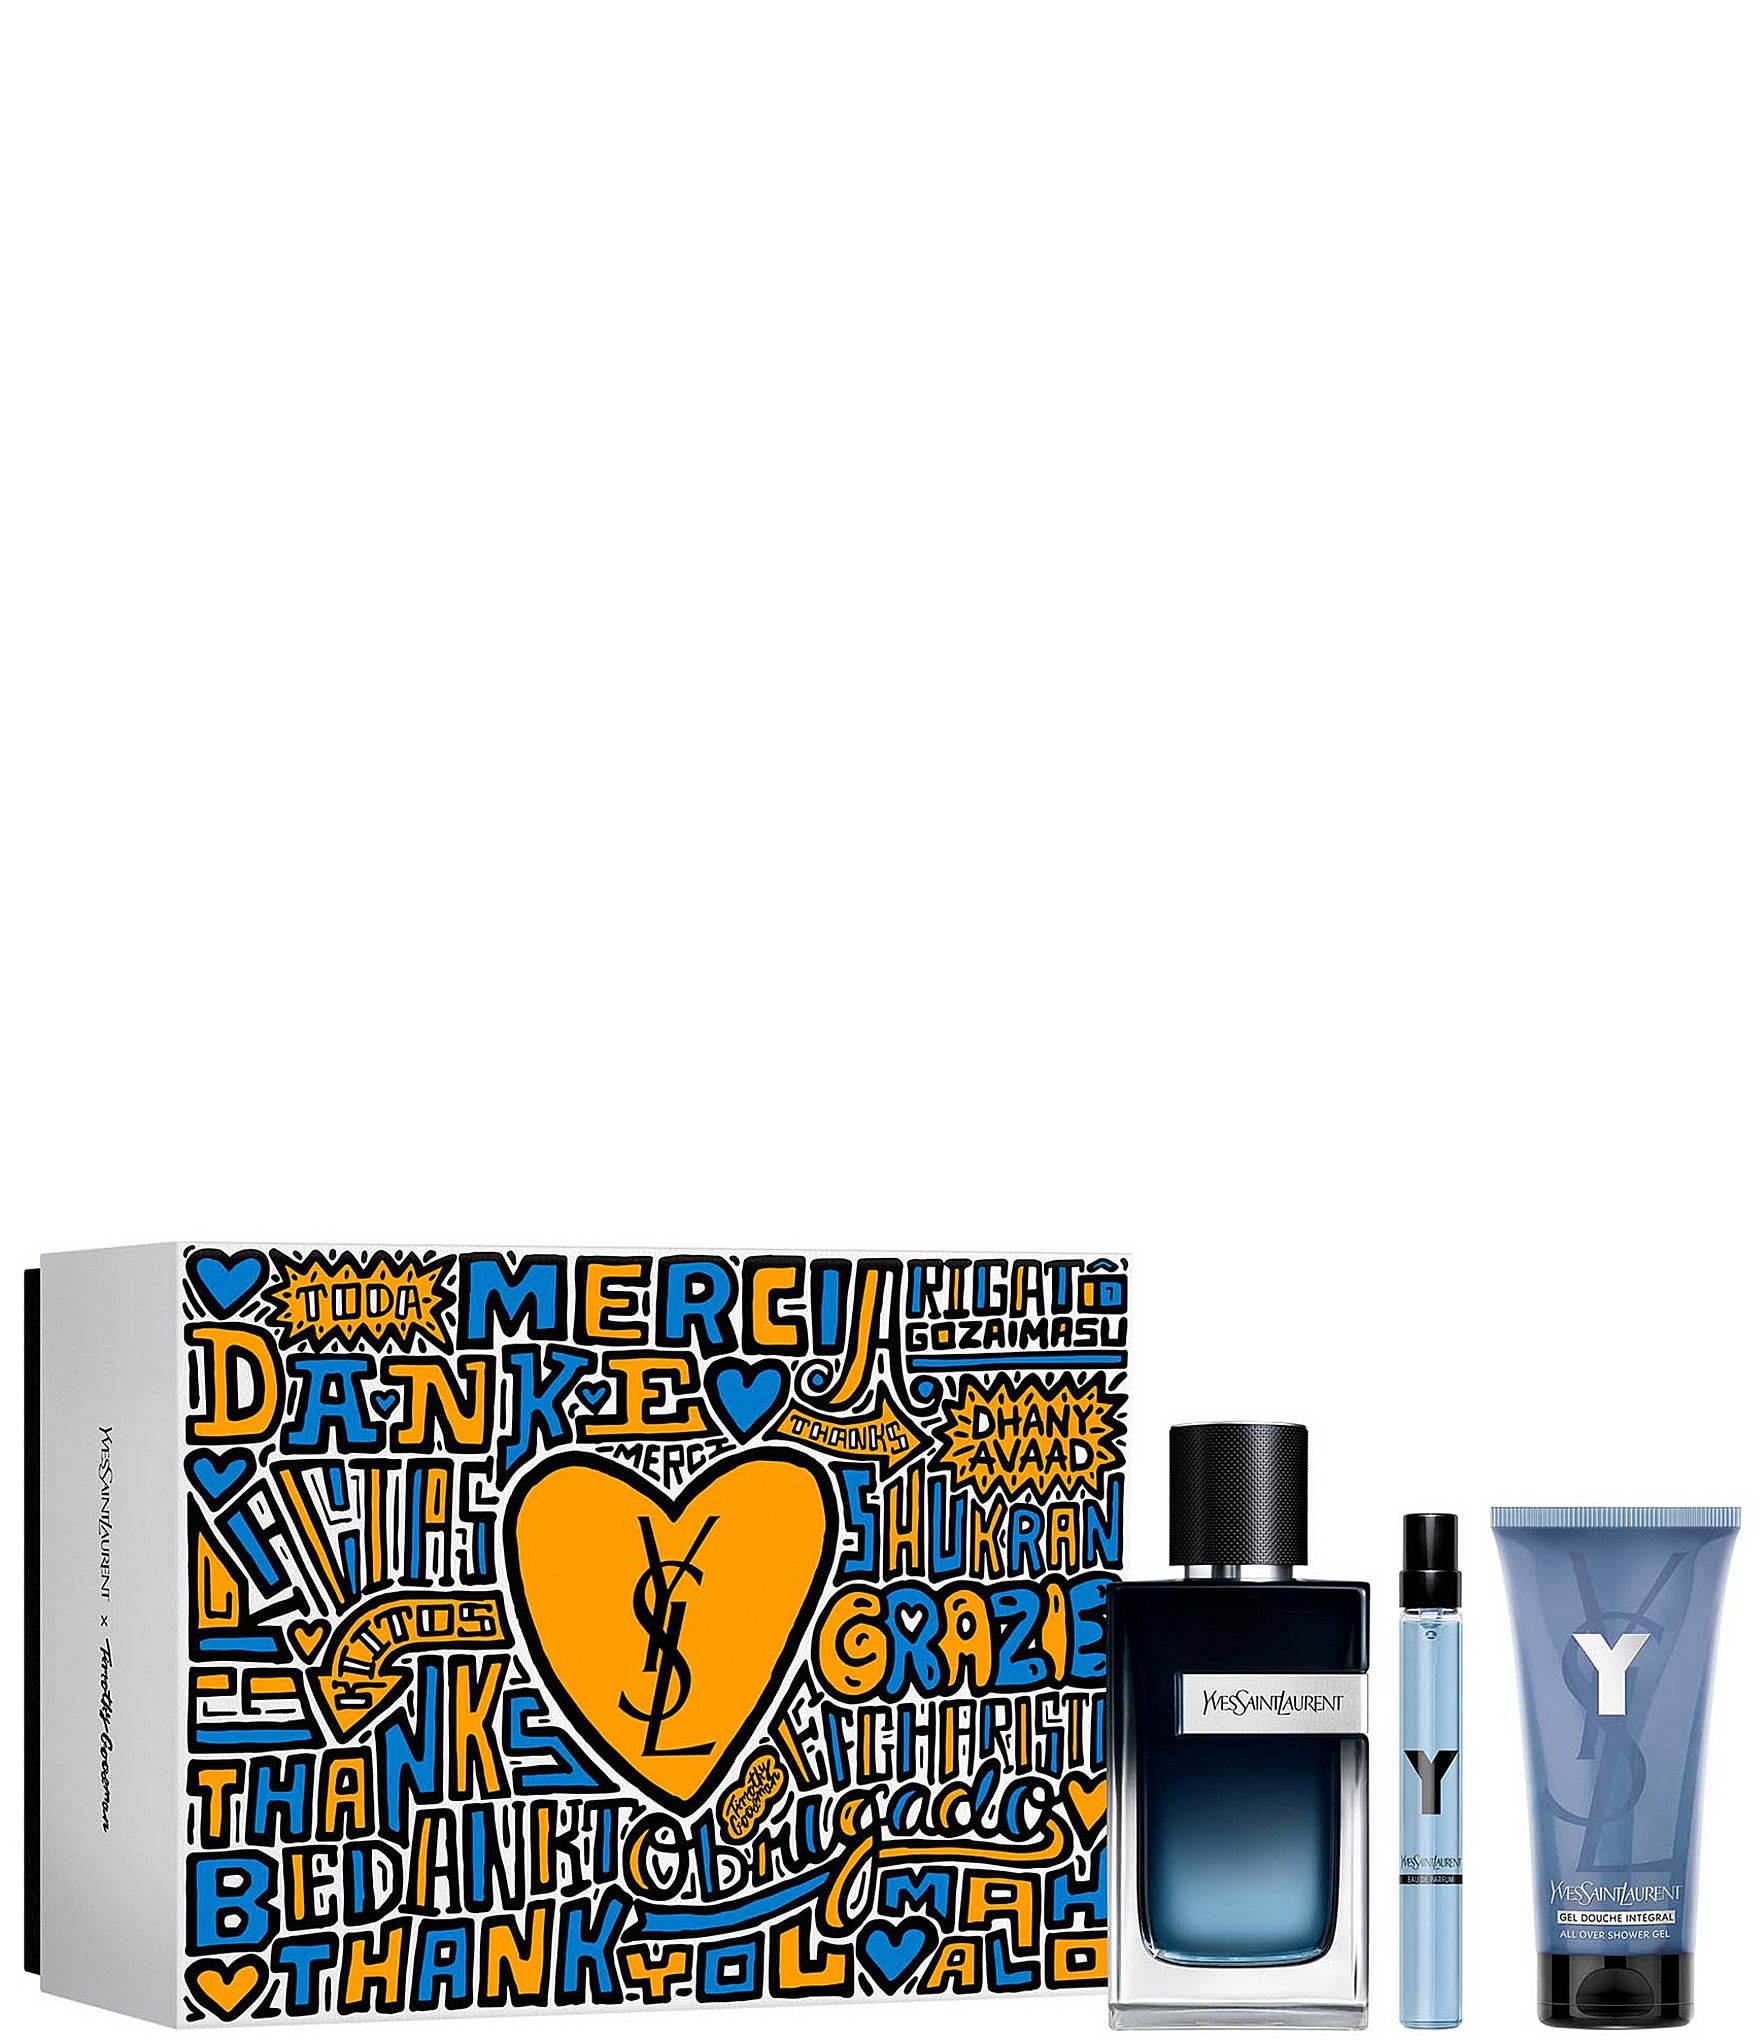 Is Yves Saint Laurent Perfume Worth The Price Tag?